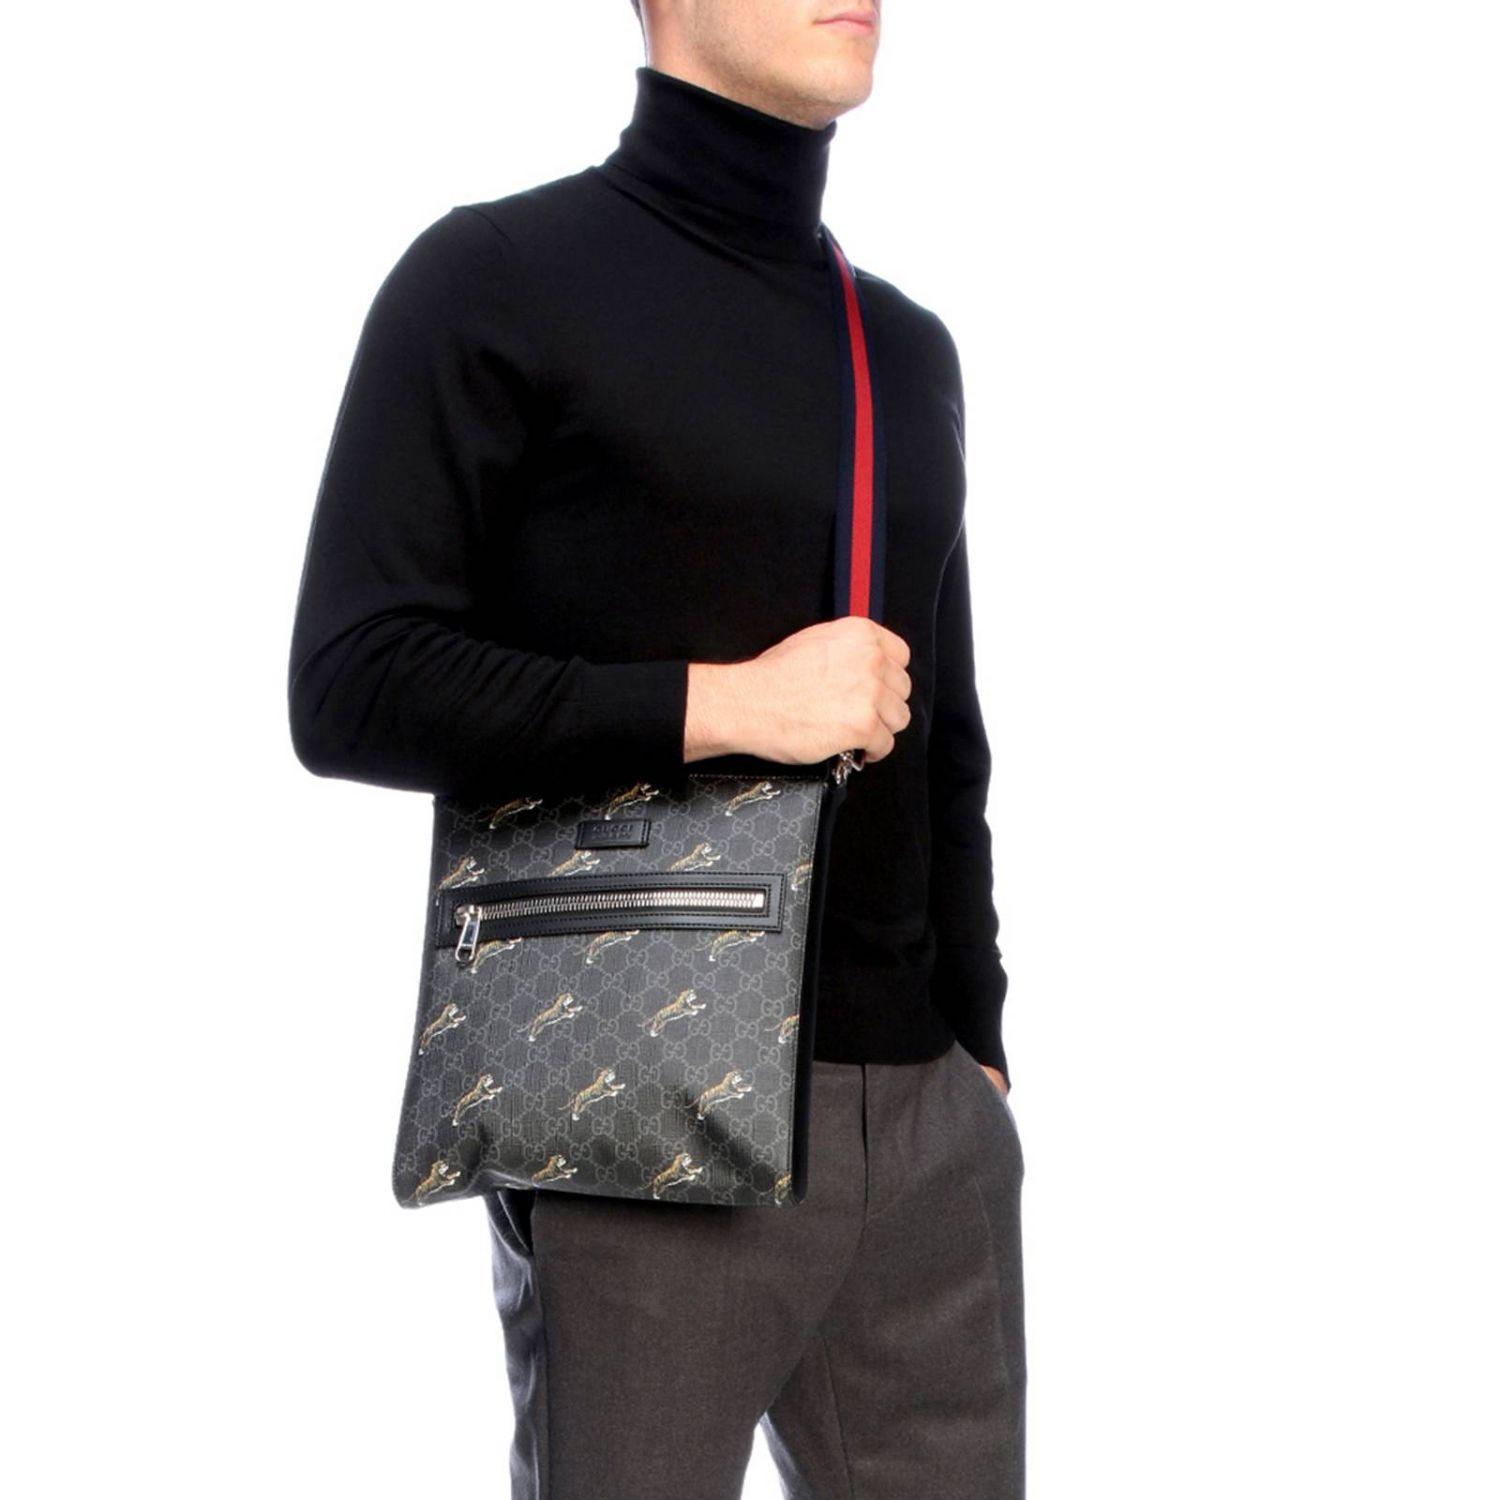 Gucci Print Leather GG Messenger Bag